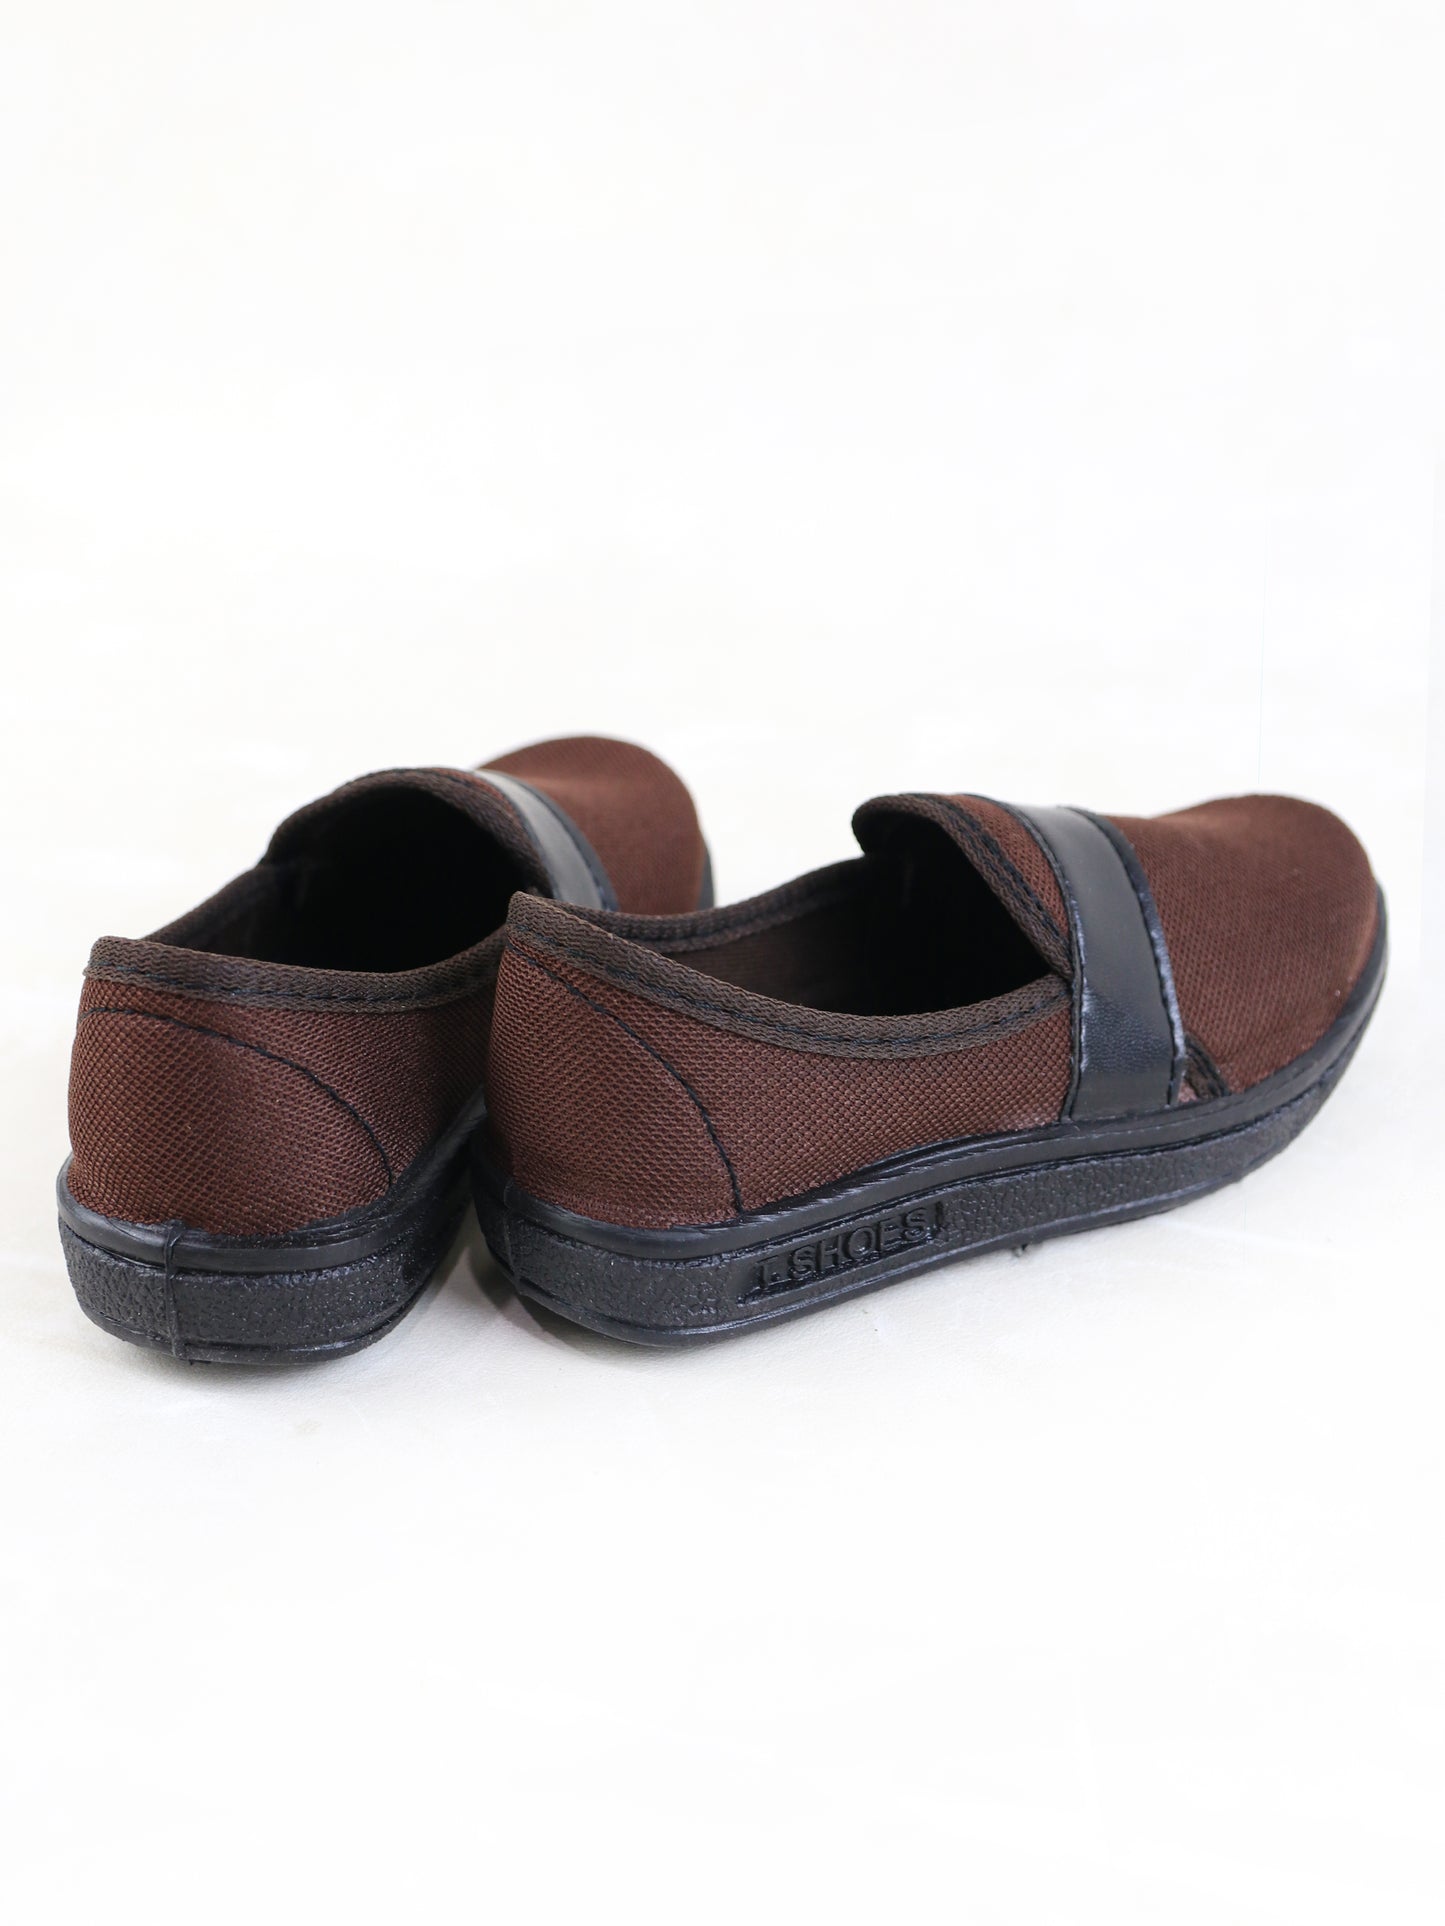 BS57 Boys Slip-On Shoes 8Yrs - 12Yrs Brown